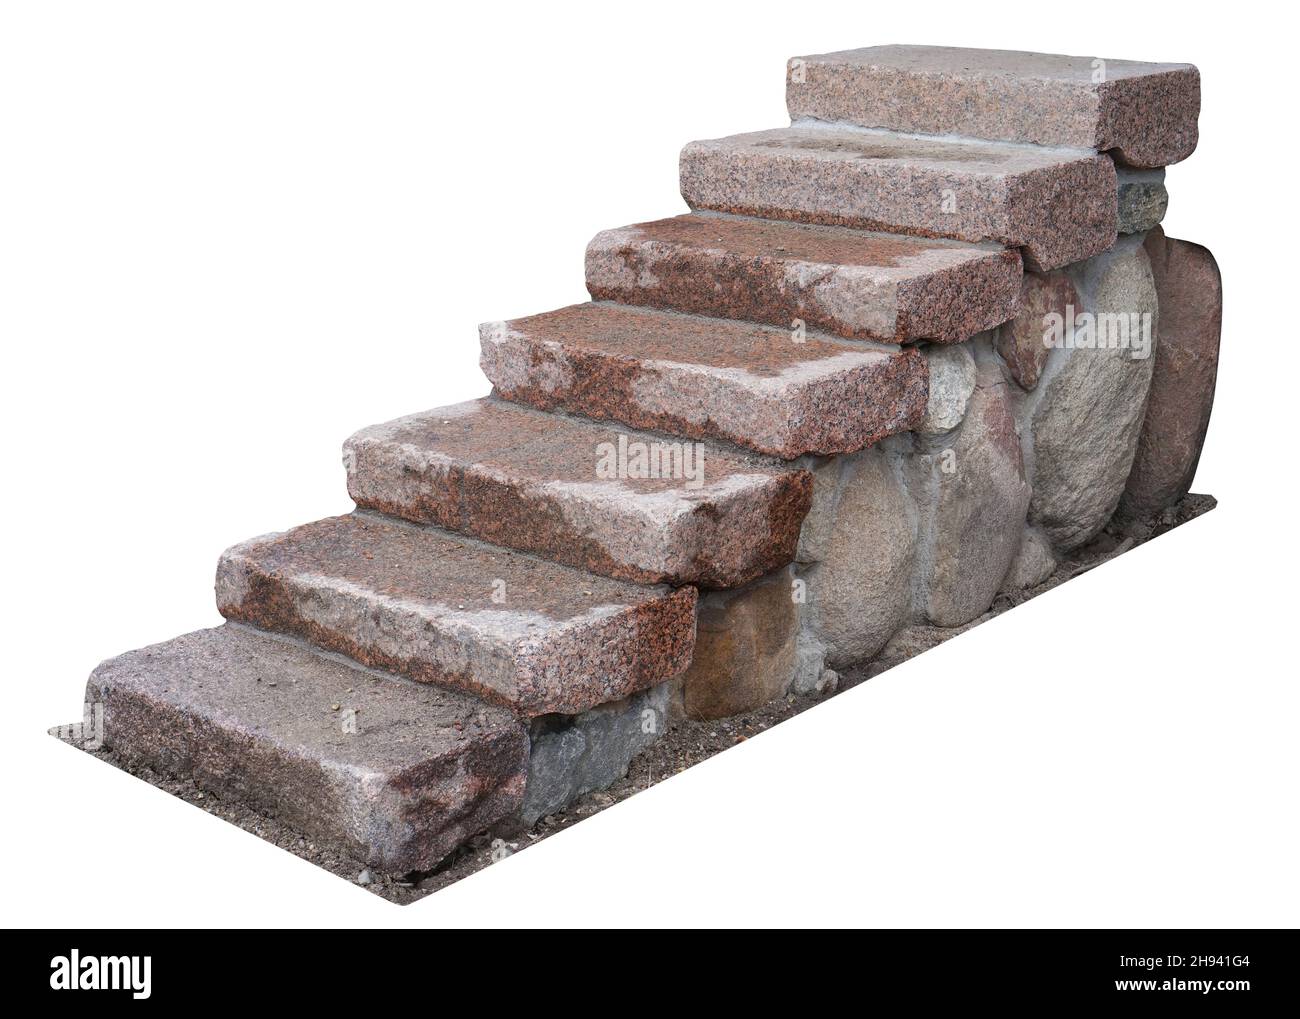 Escalera de granja casera hecha de bloques de granito. Aislado sobre blanco Foto de stock